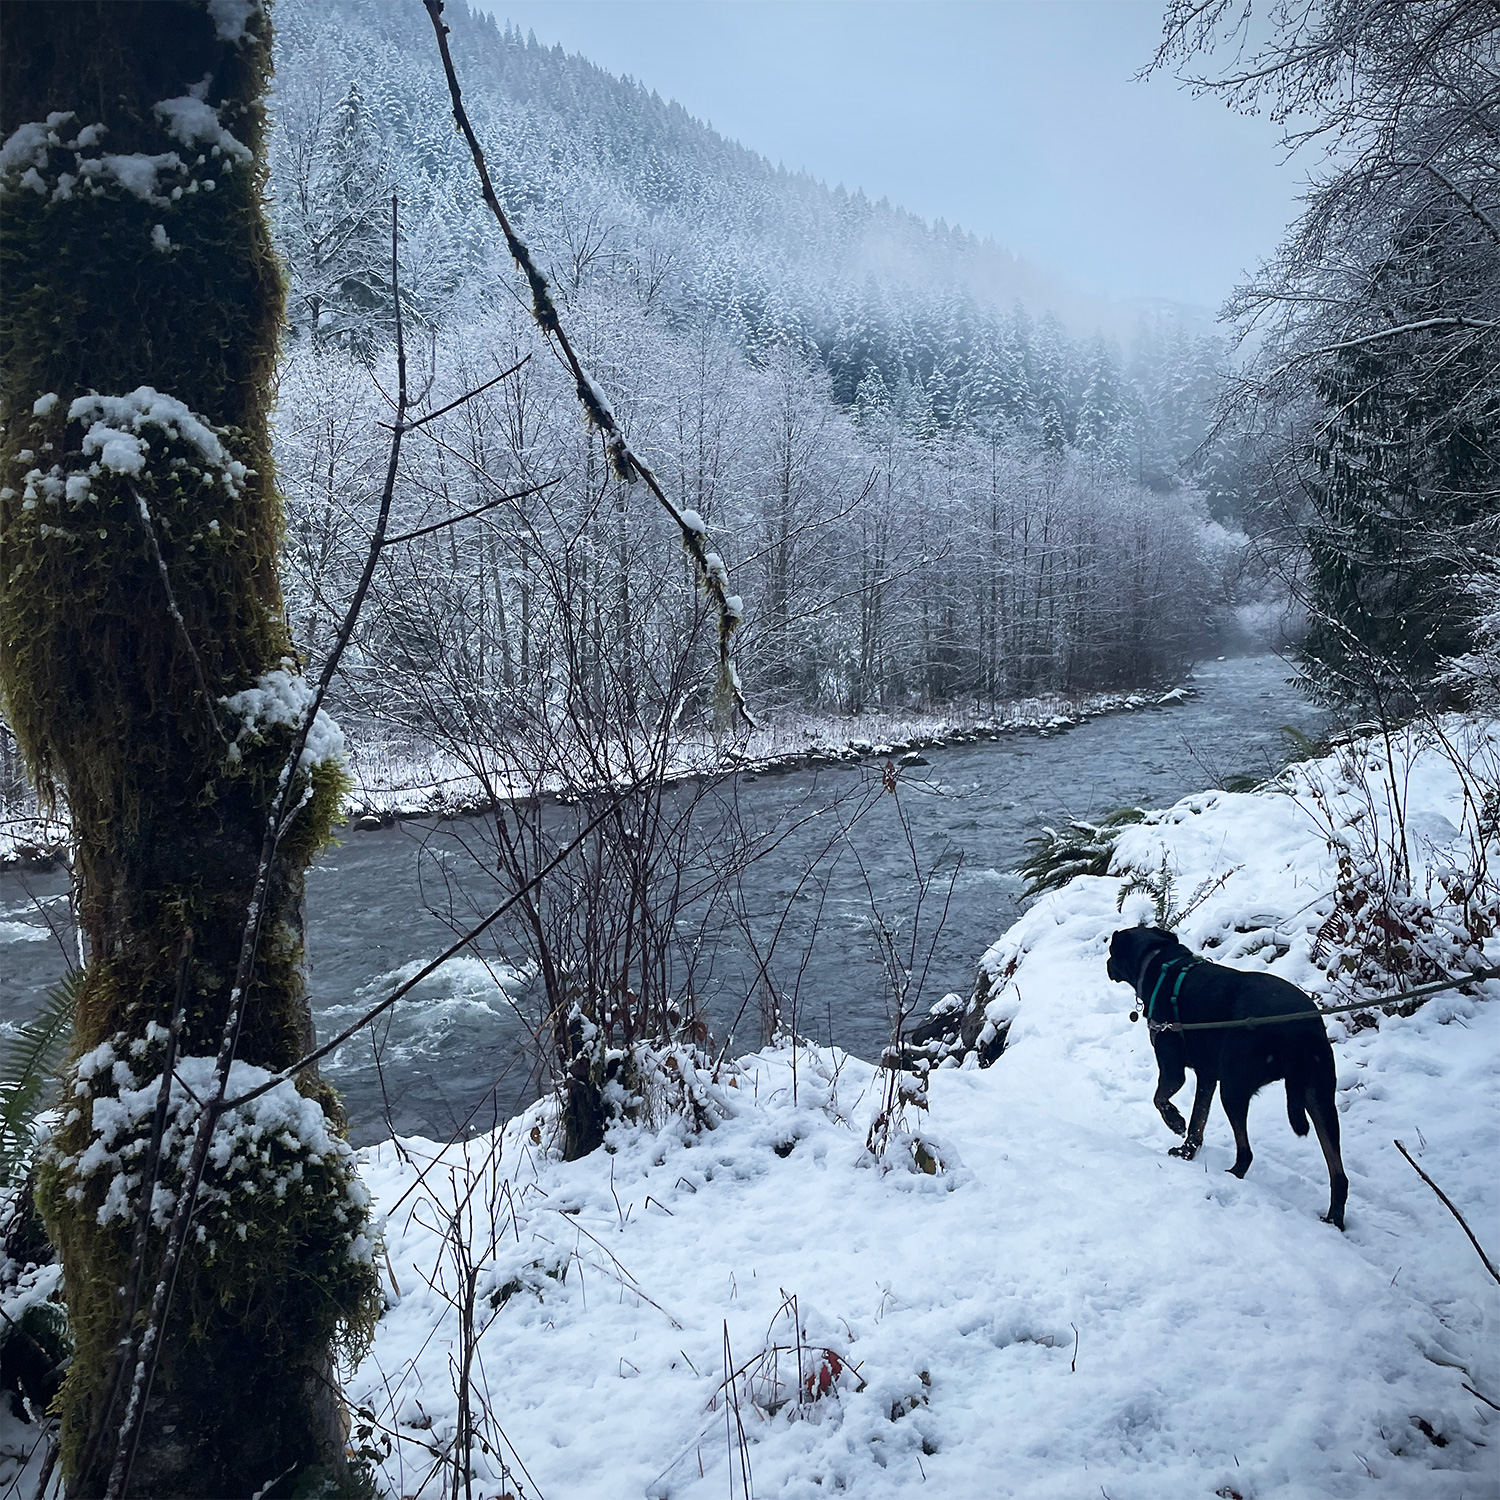 A dog walks through the snow by a river